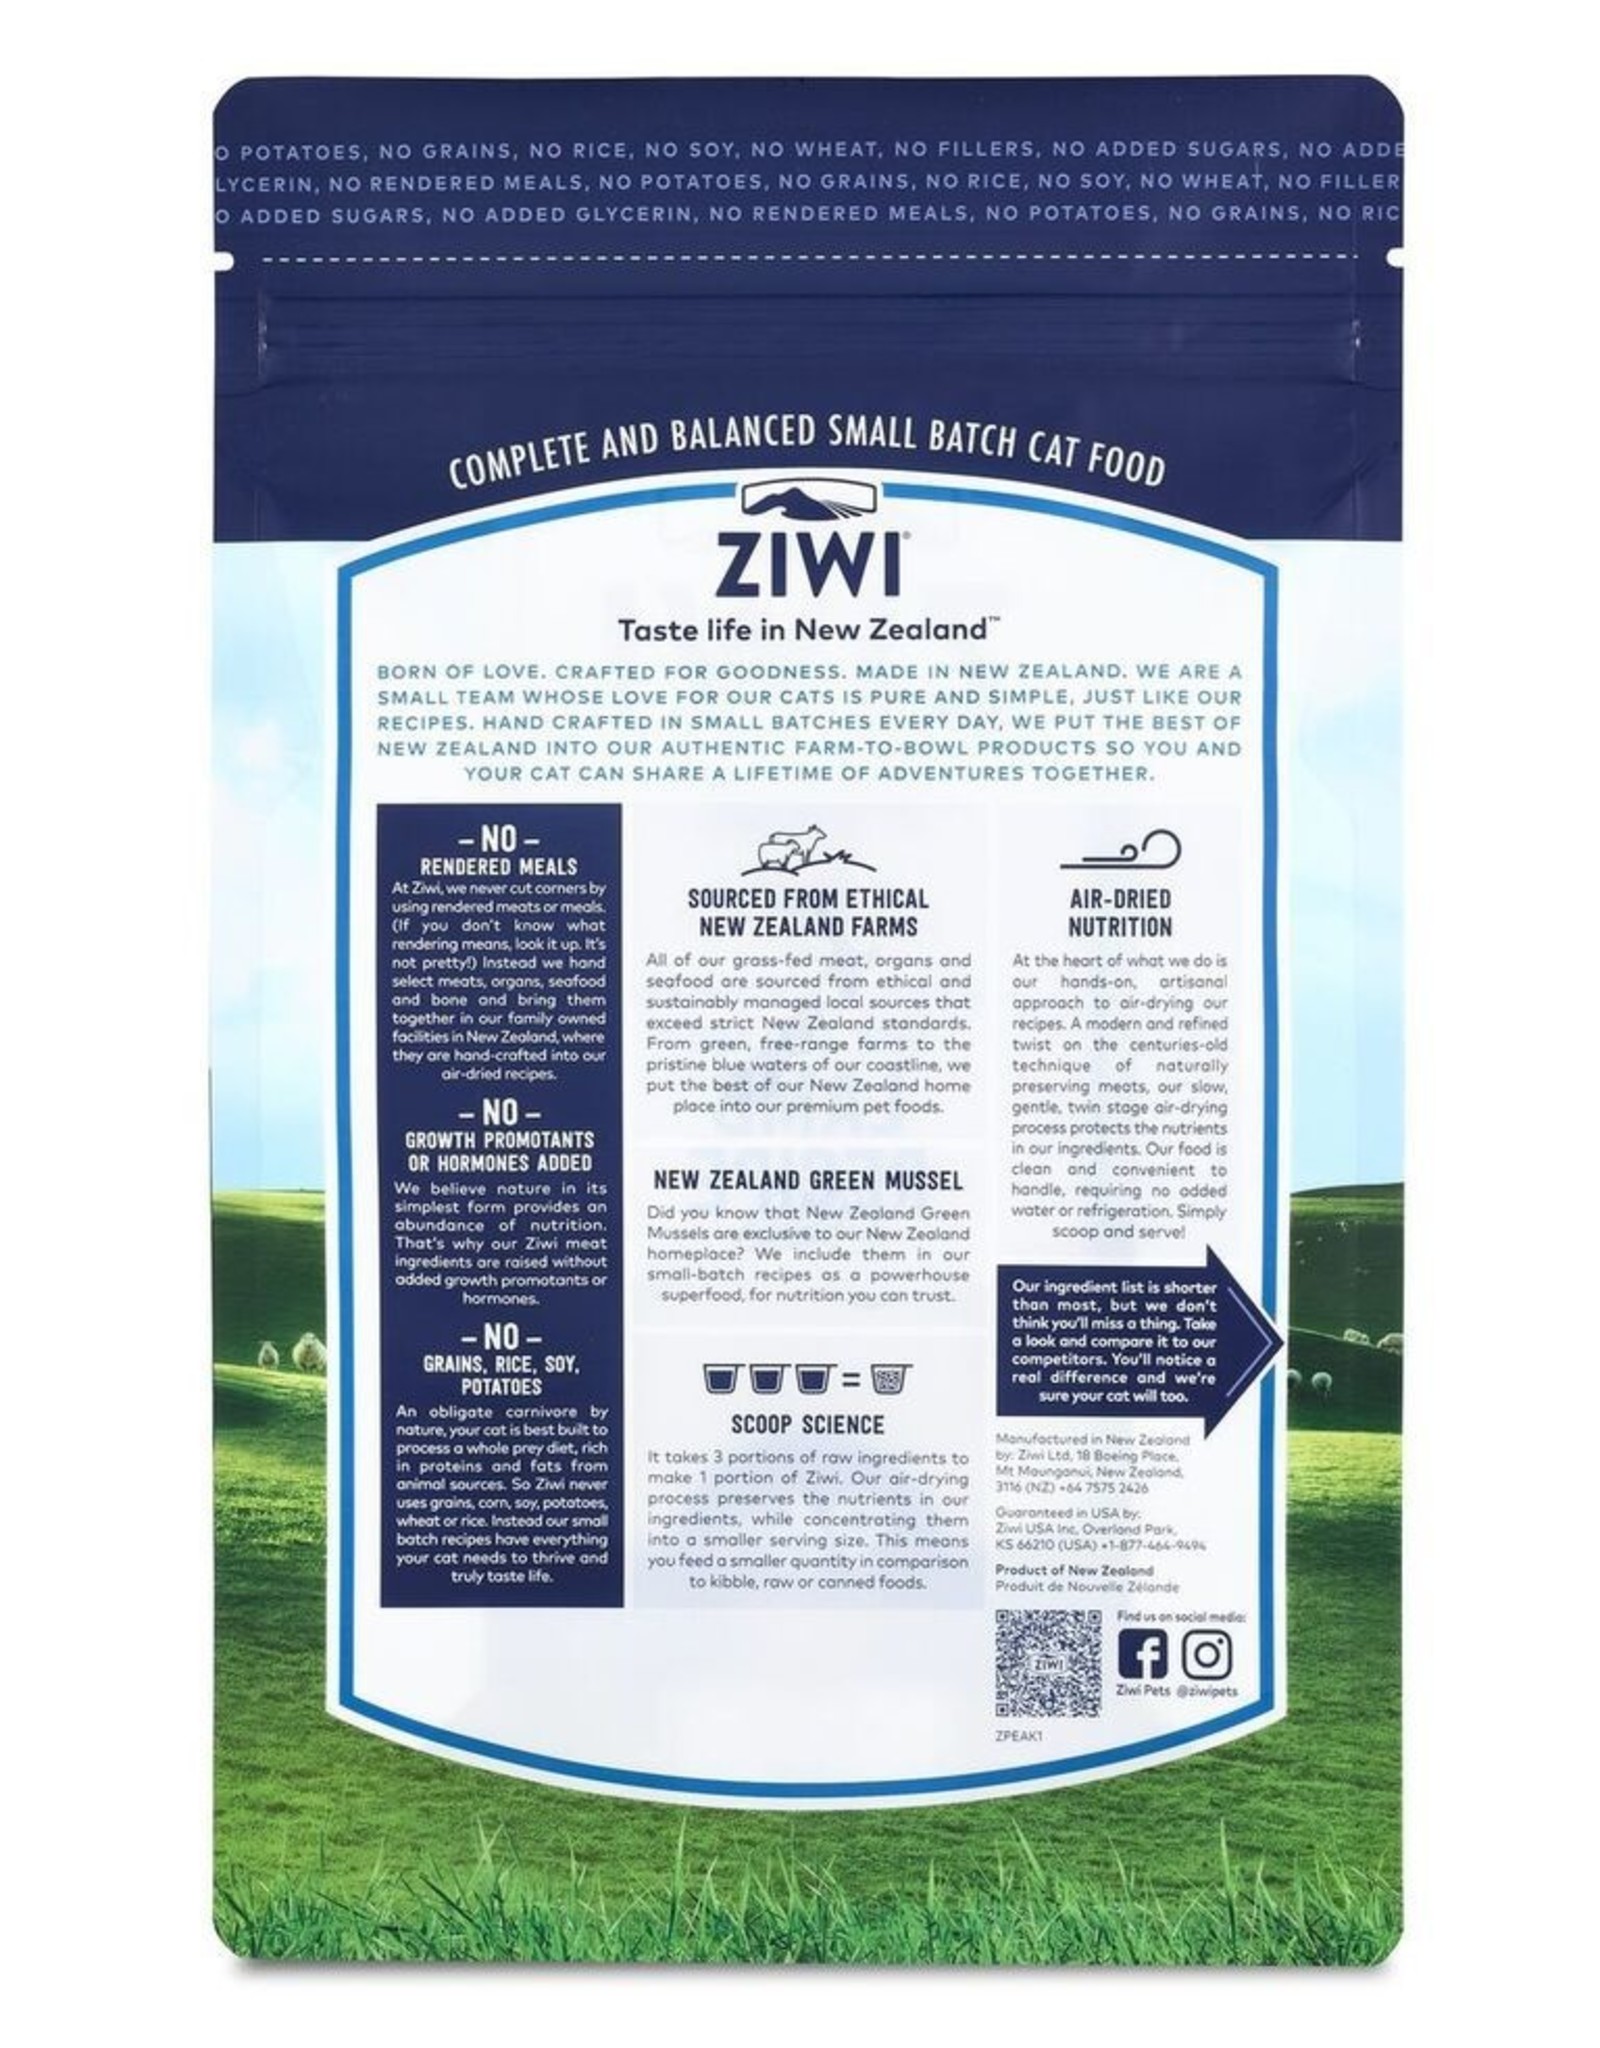 ZIWI PEAK ZIWI Peak Air-Dried Lamb Recipe for Cats